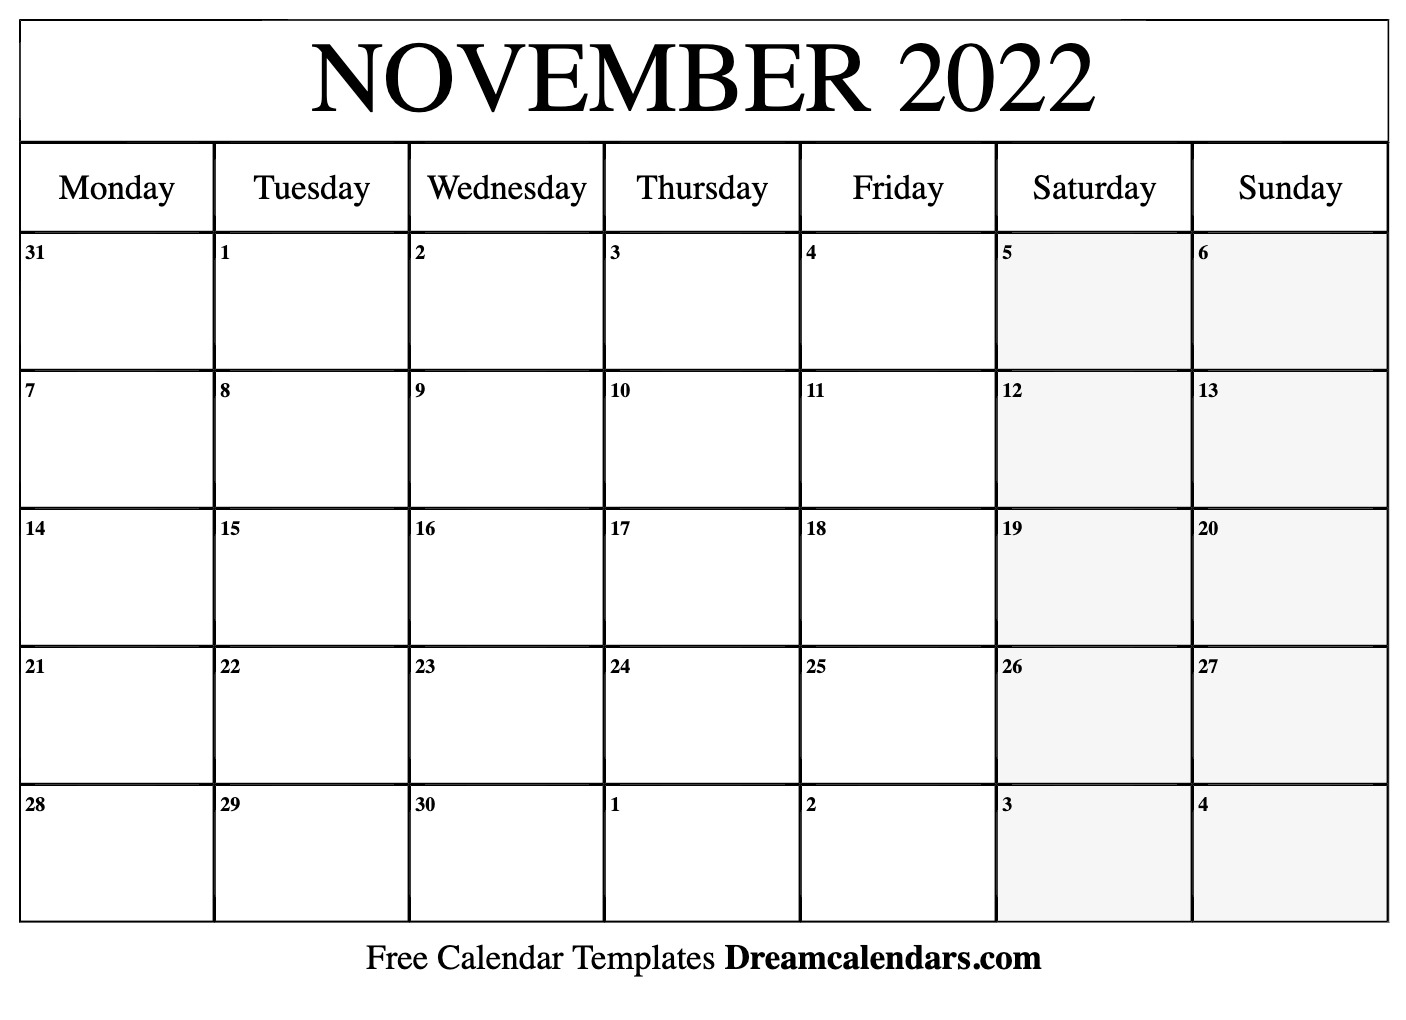 November 2022 Calendar Printable Download Printable November 2022 Calendars